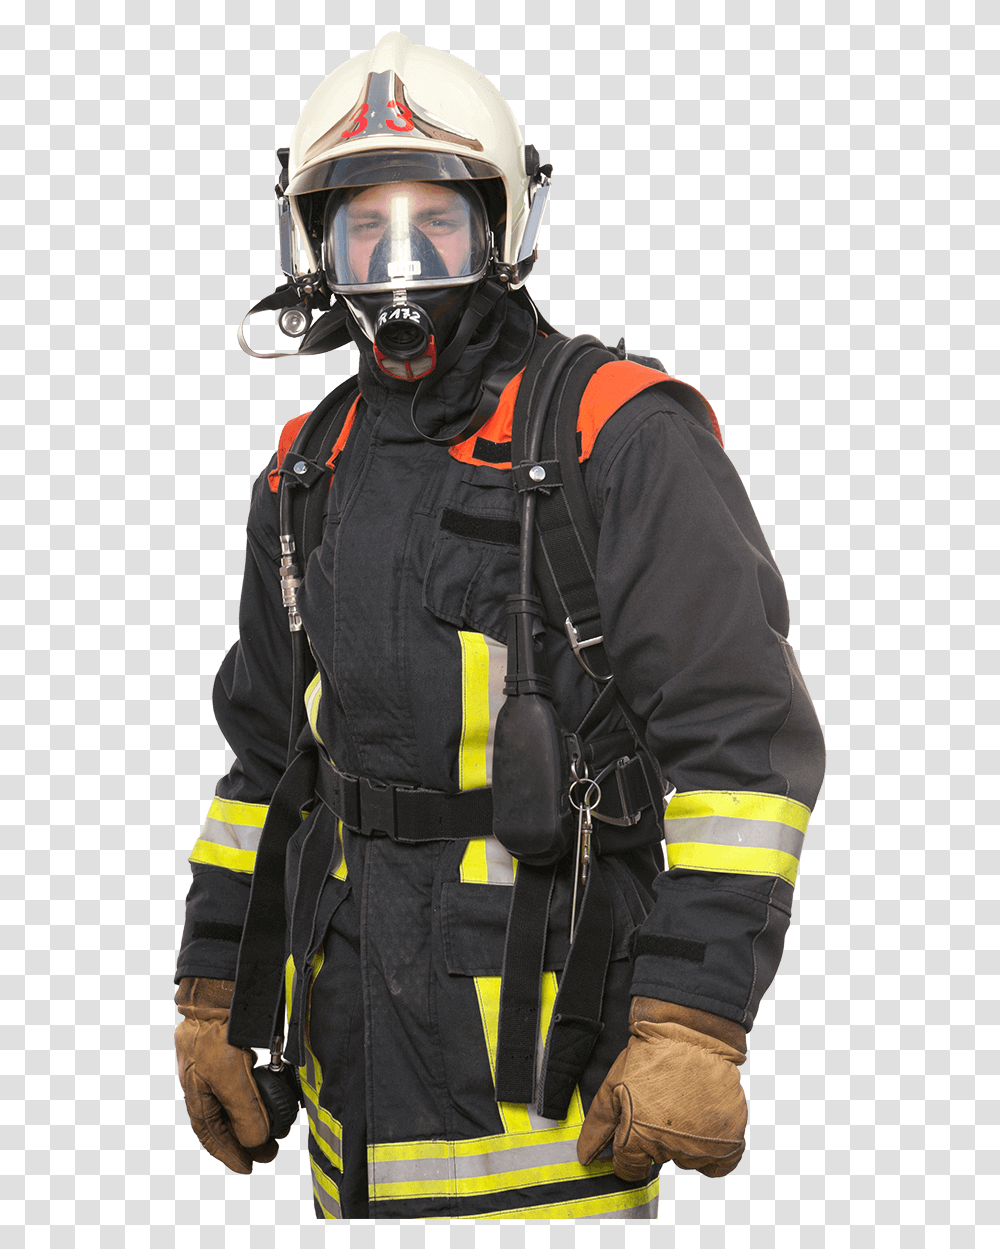 Firefighter Image Fire Fighters No Background, Helmet, Apparel, Fireman Transparent Png